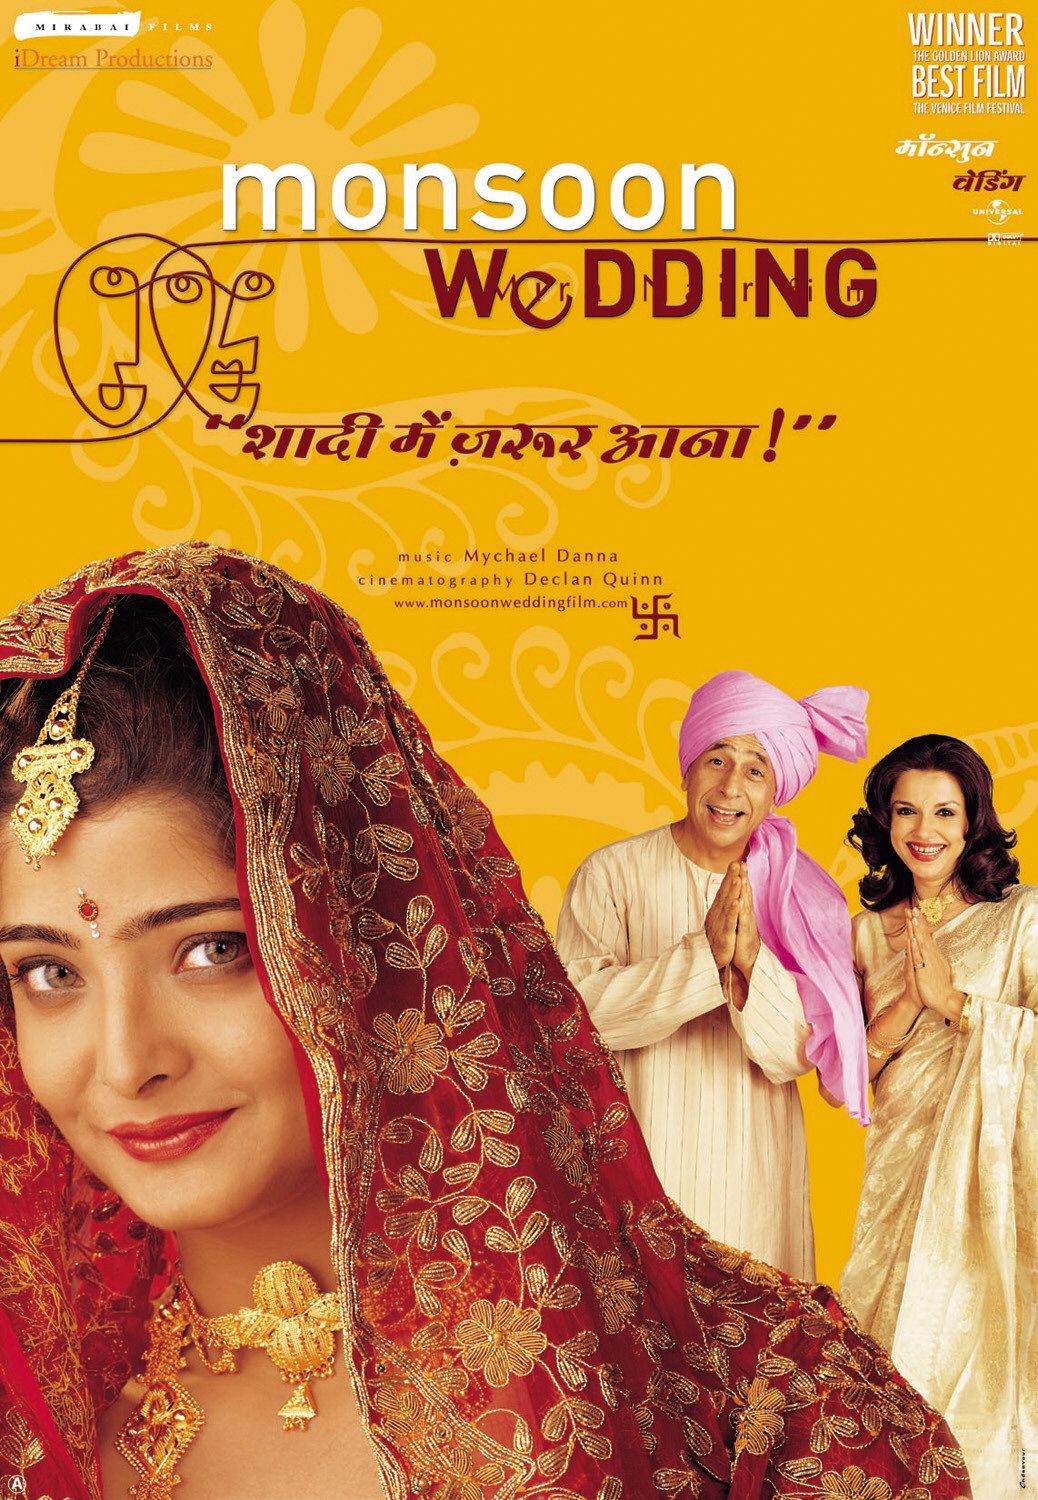 monsoon-wedding-2001-18610-poster.jpg